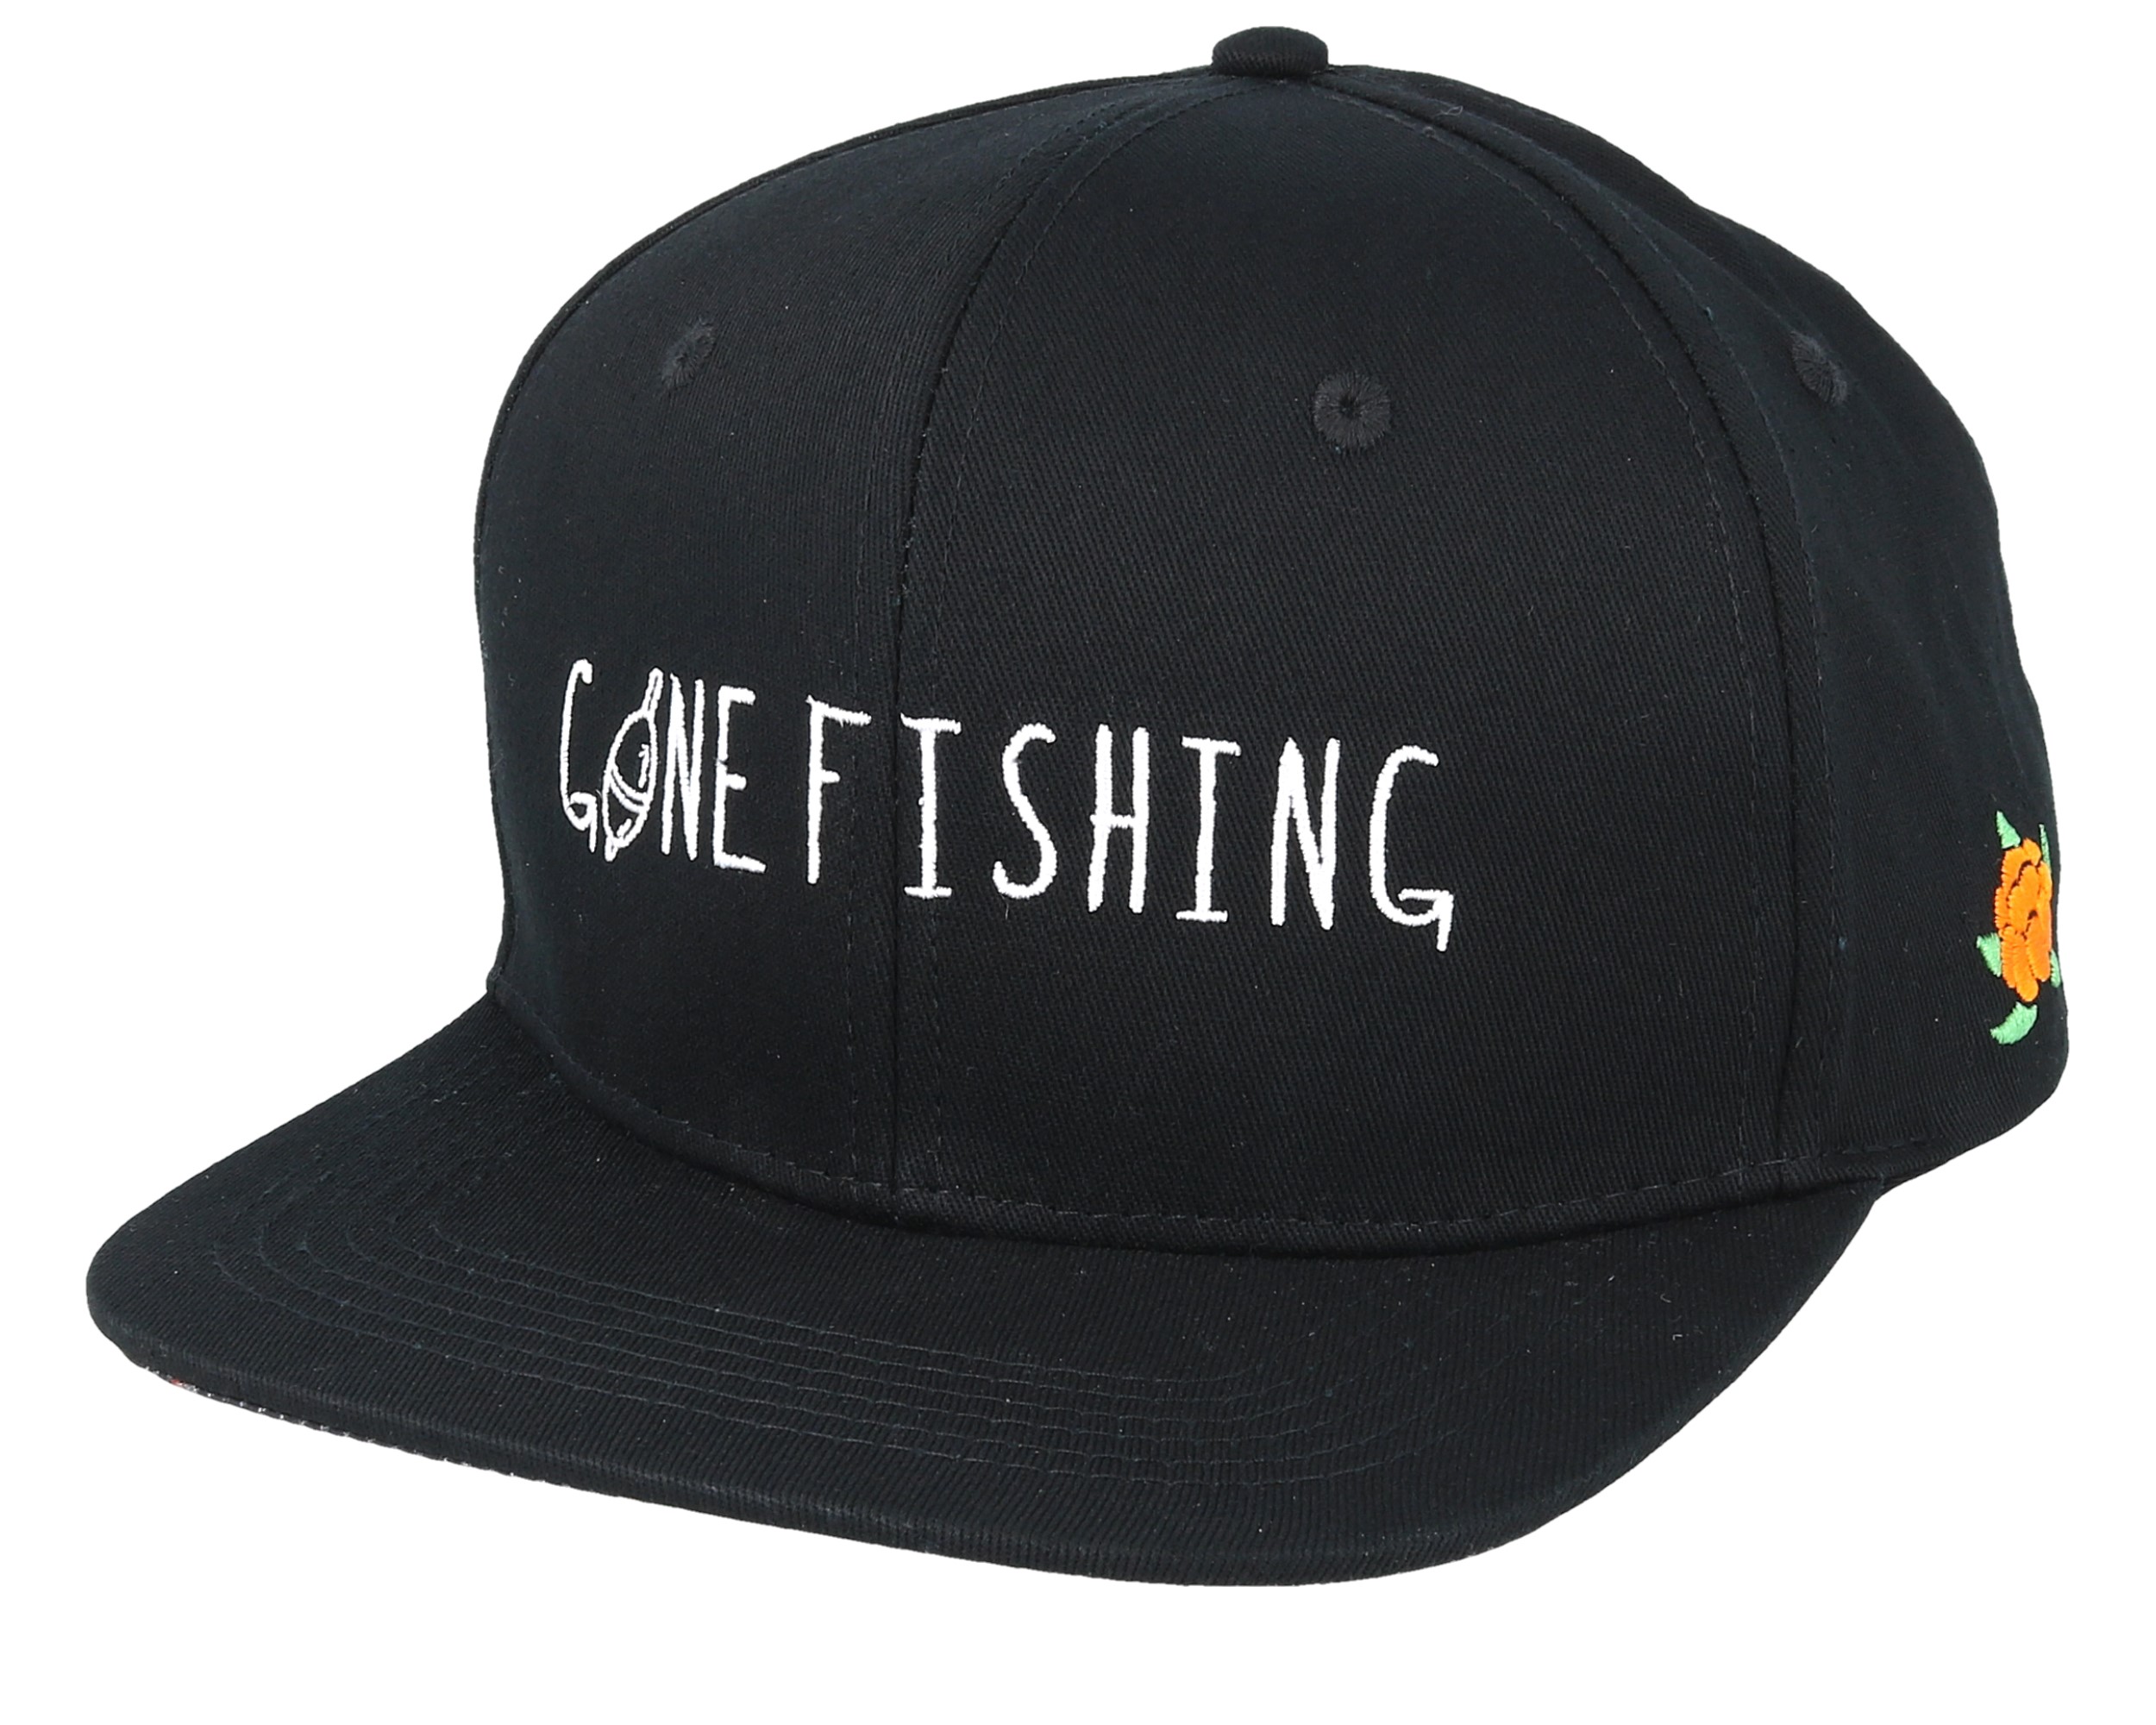 Gone Fishing Black Snapback - Sqrtn cap